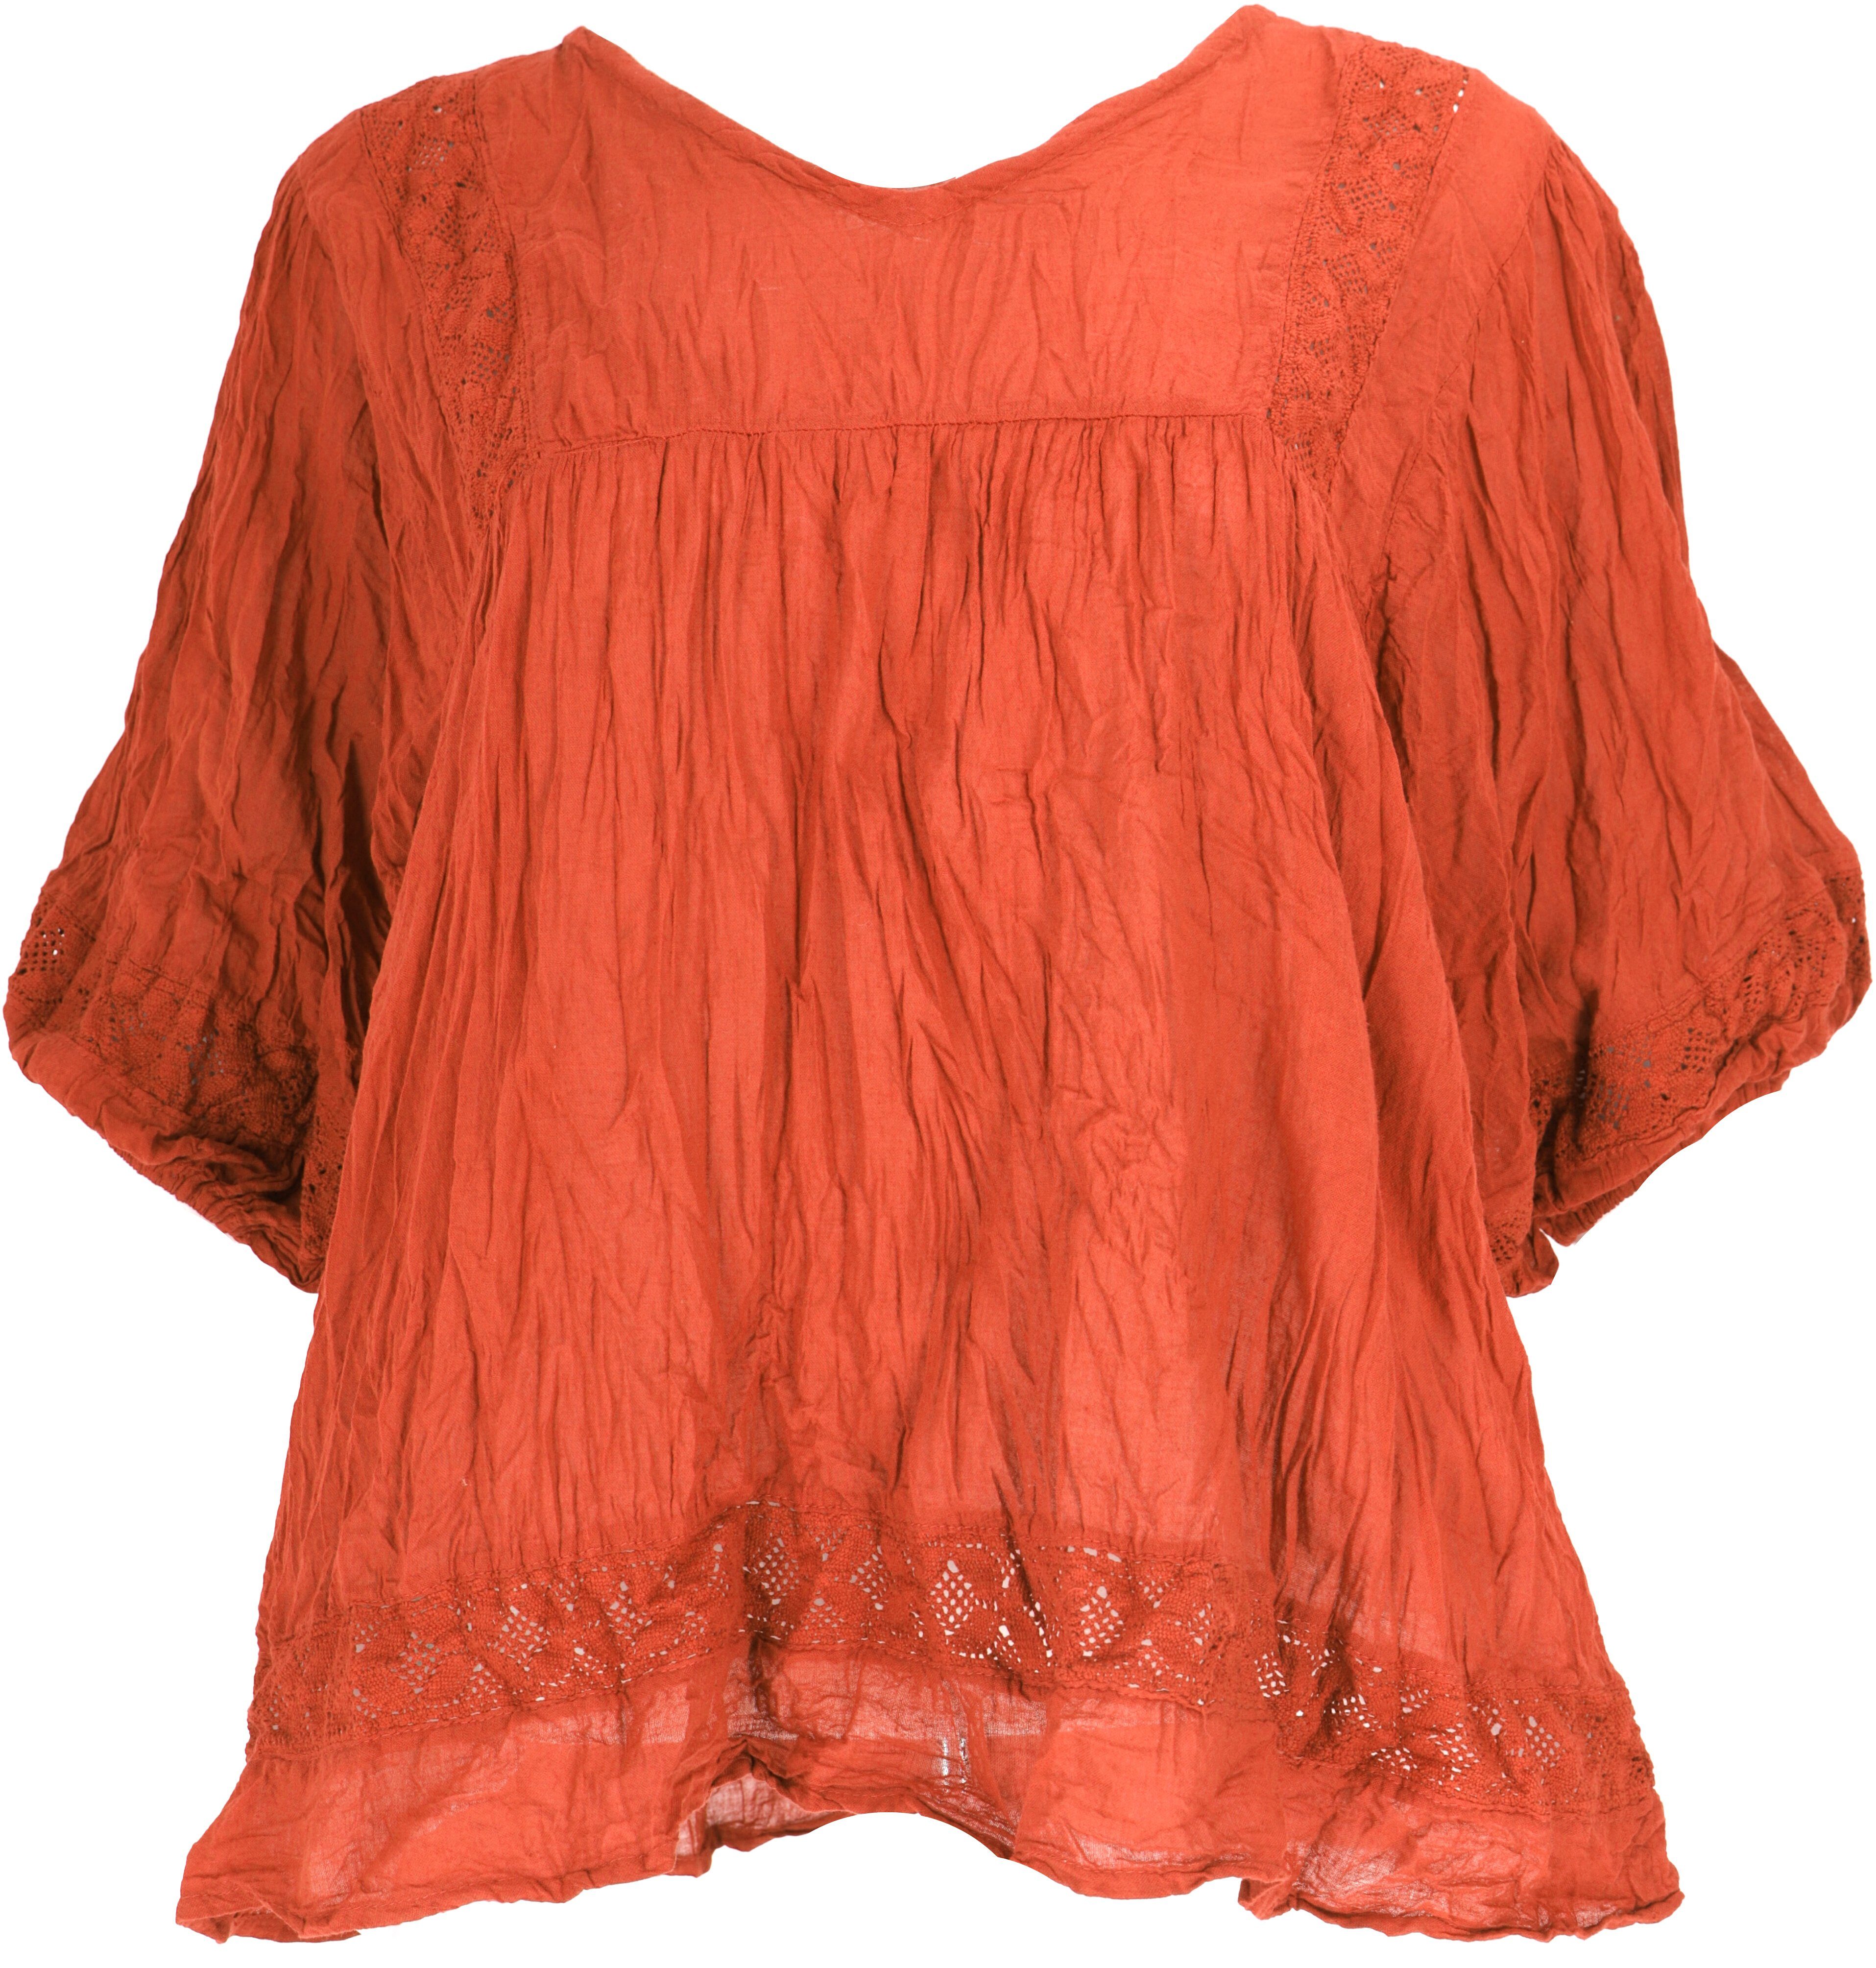 Guru-Shop Bekleidung weites im.. orange Blusenshirt alternative Boho Longbluse Krinkelbluse,